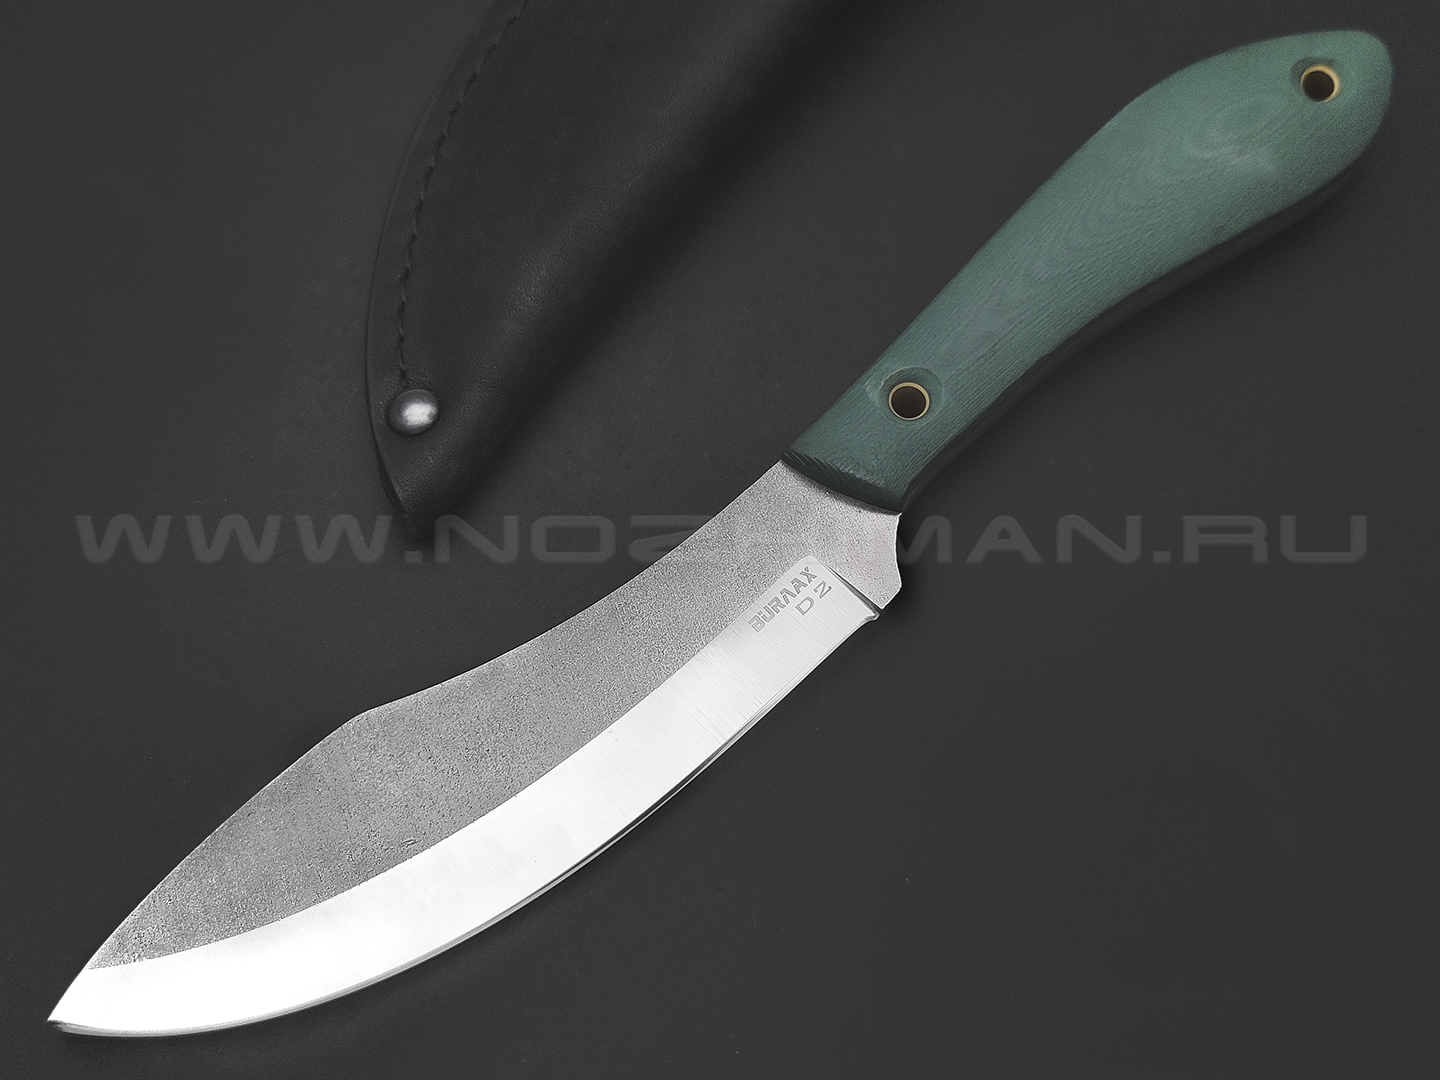 Burlax нож Канадец большой BX0191 сталь D2 satin, рукоять G10 green, ножны кожа